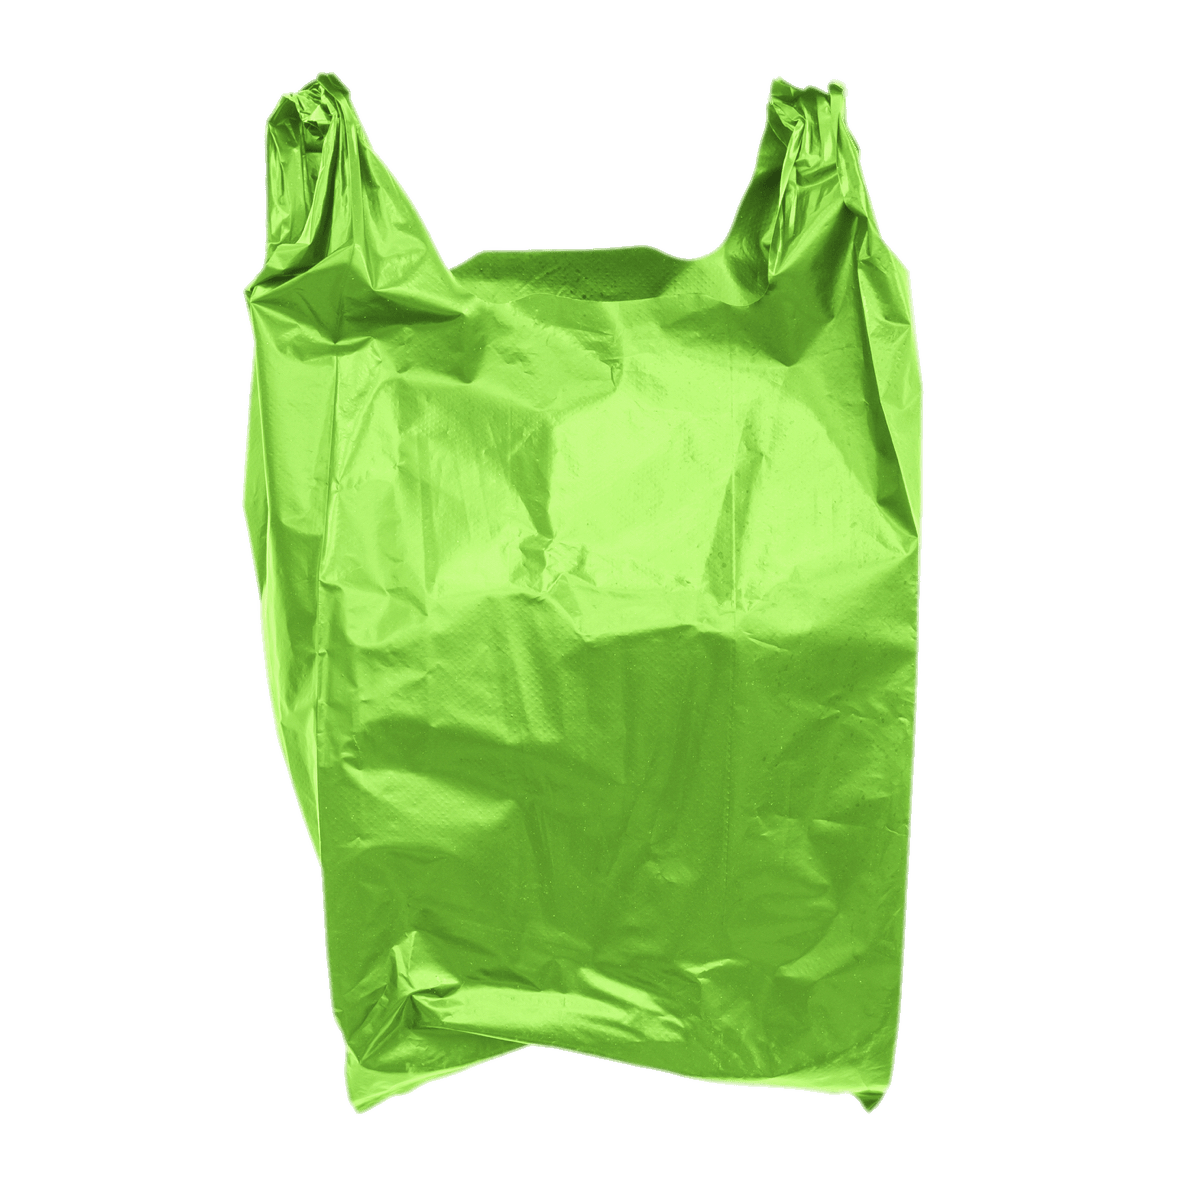 Plastic Bag PNG Pic Clip Art Background